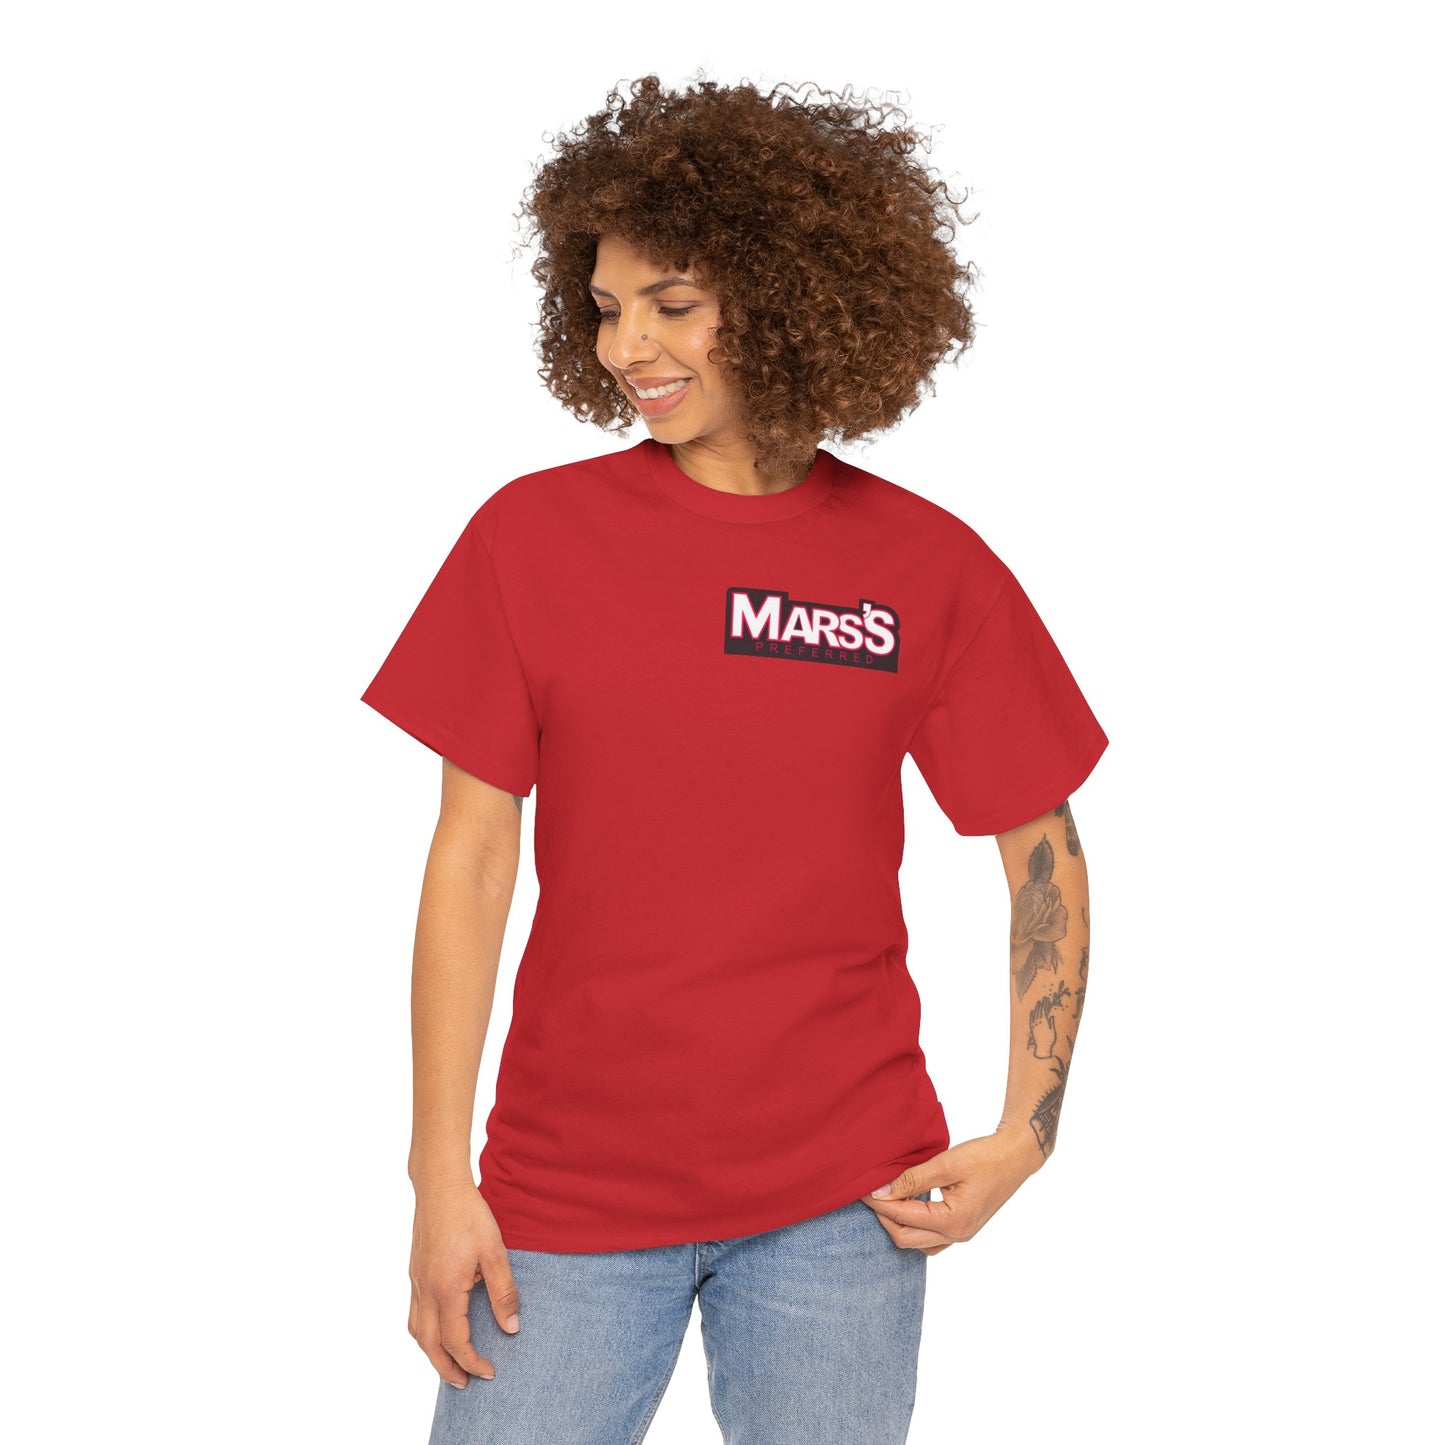 Black Ocean: Mars's Preferred t-shirt